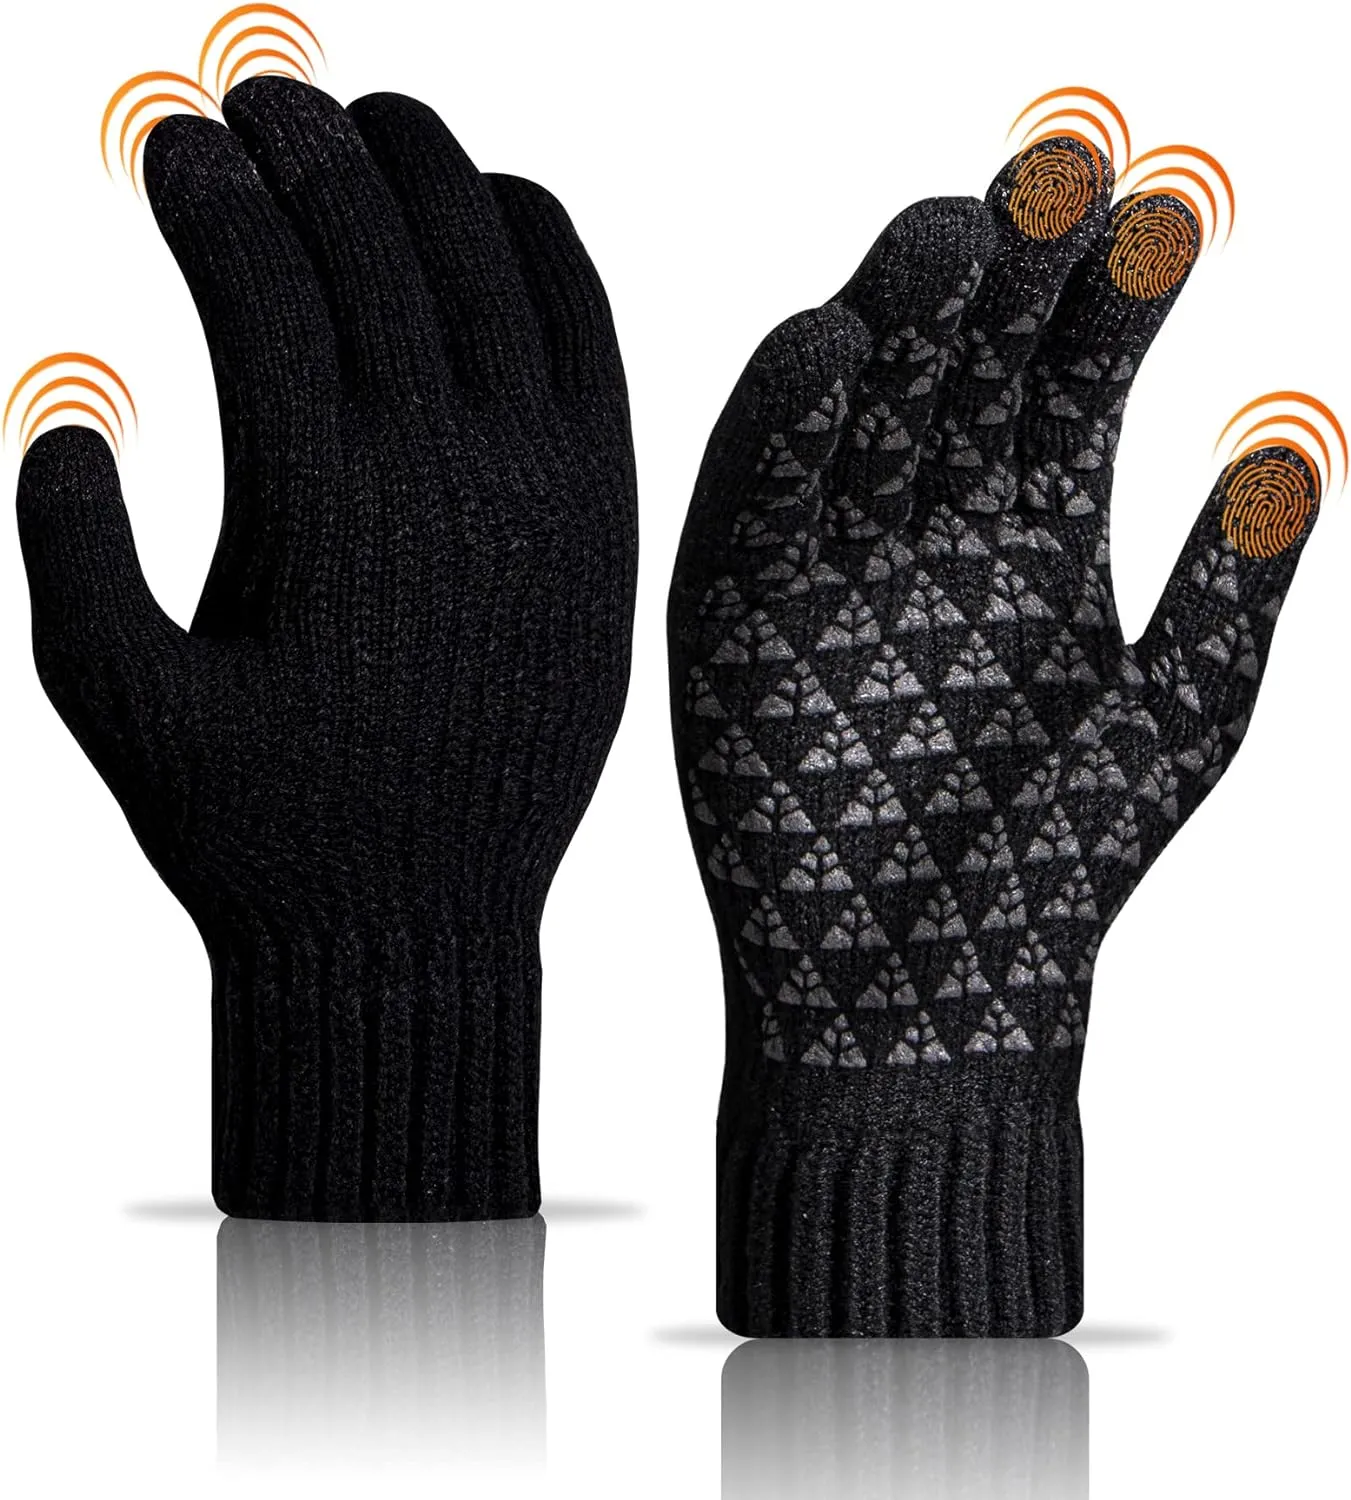 Protado Winter Gloves Men: A Warm and Comfortable Option for Winter